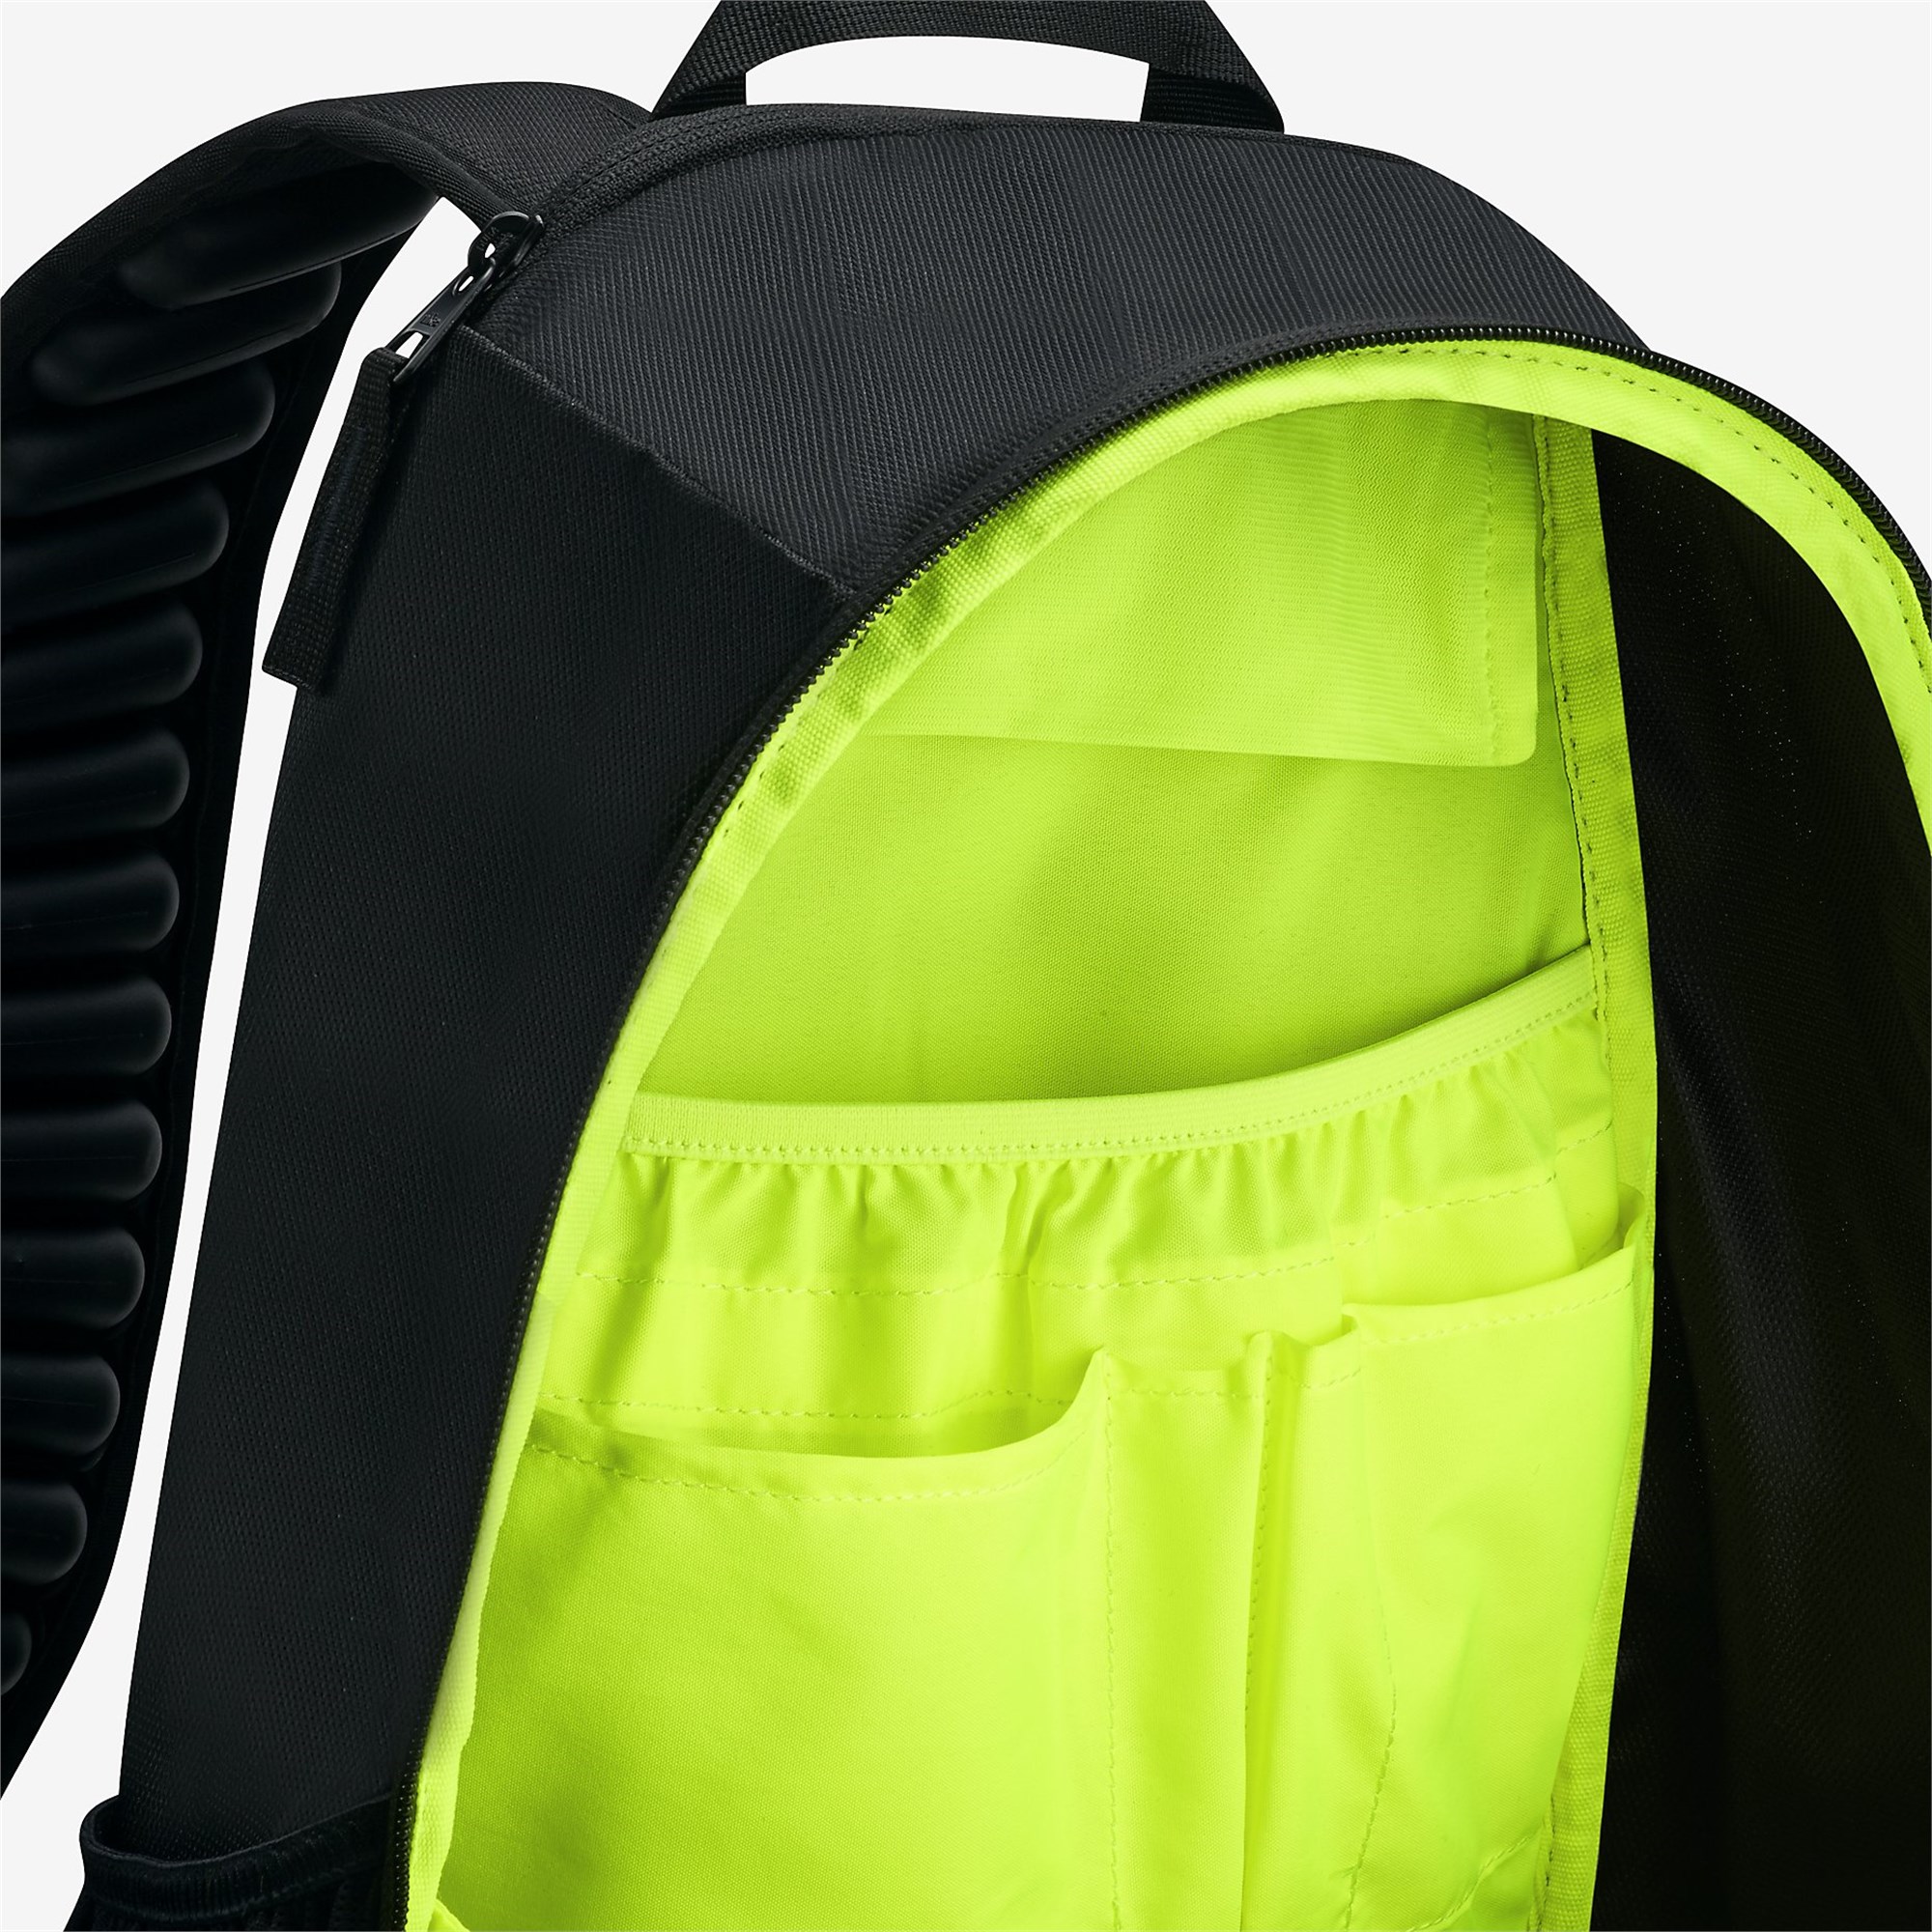 nike vapor speed 2. 34l backpack